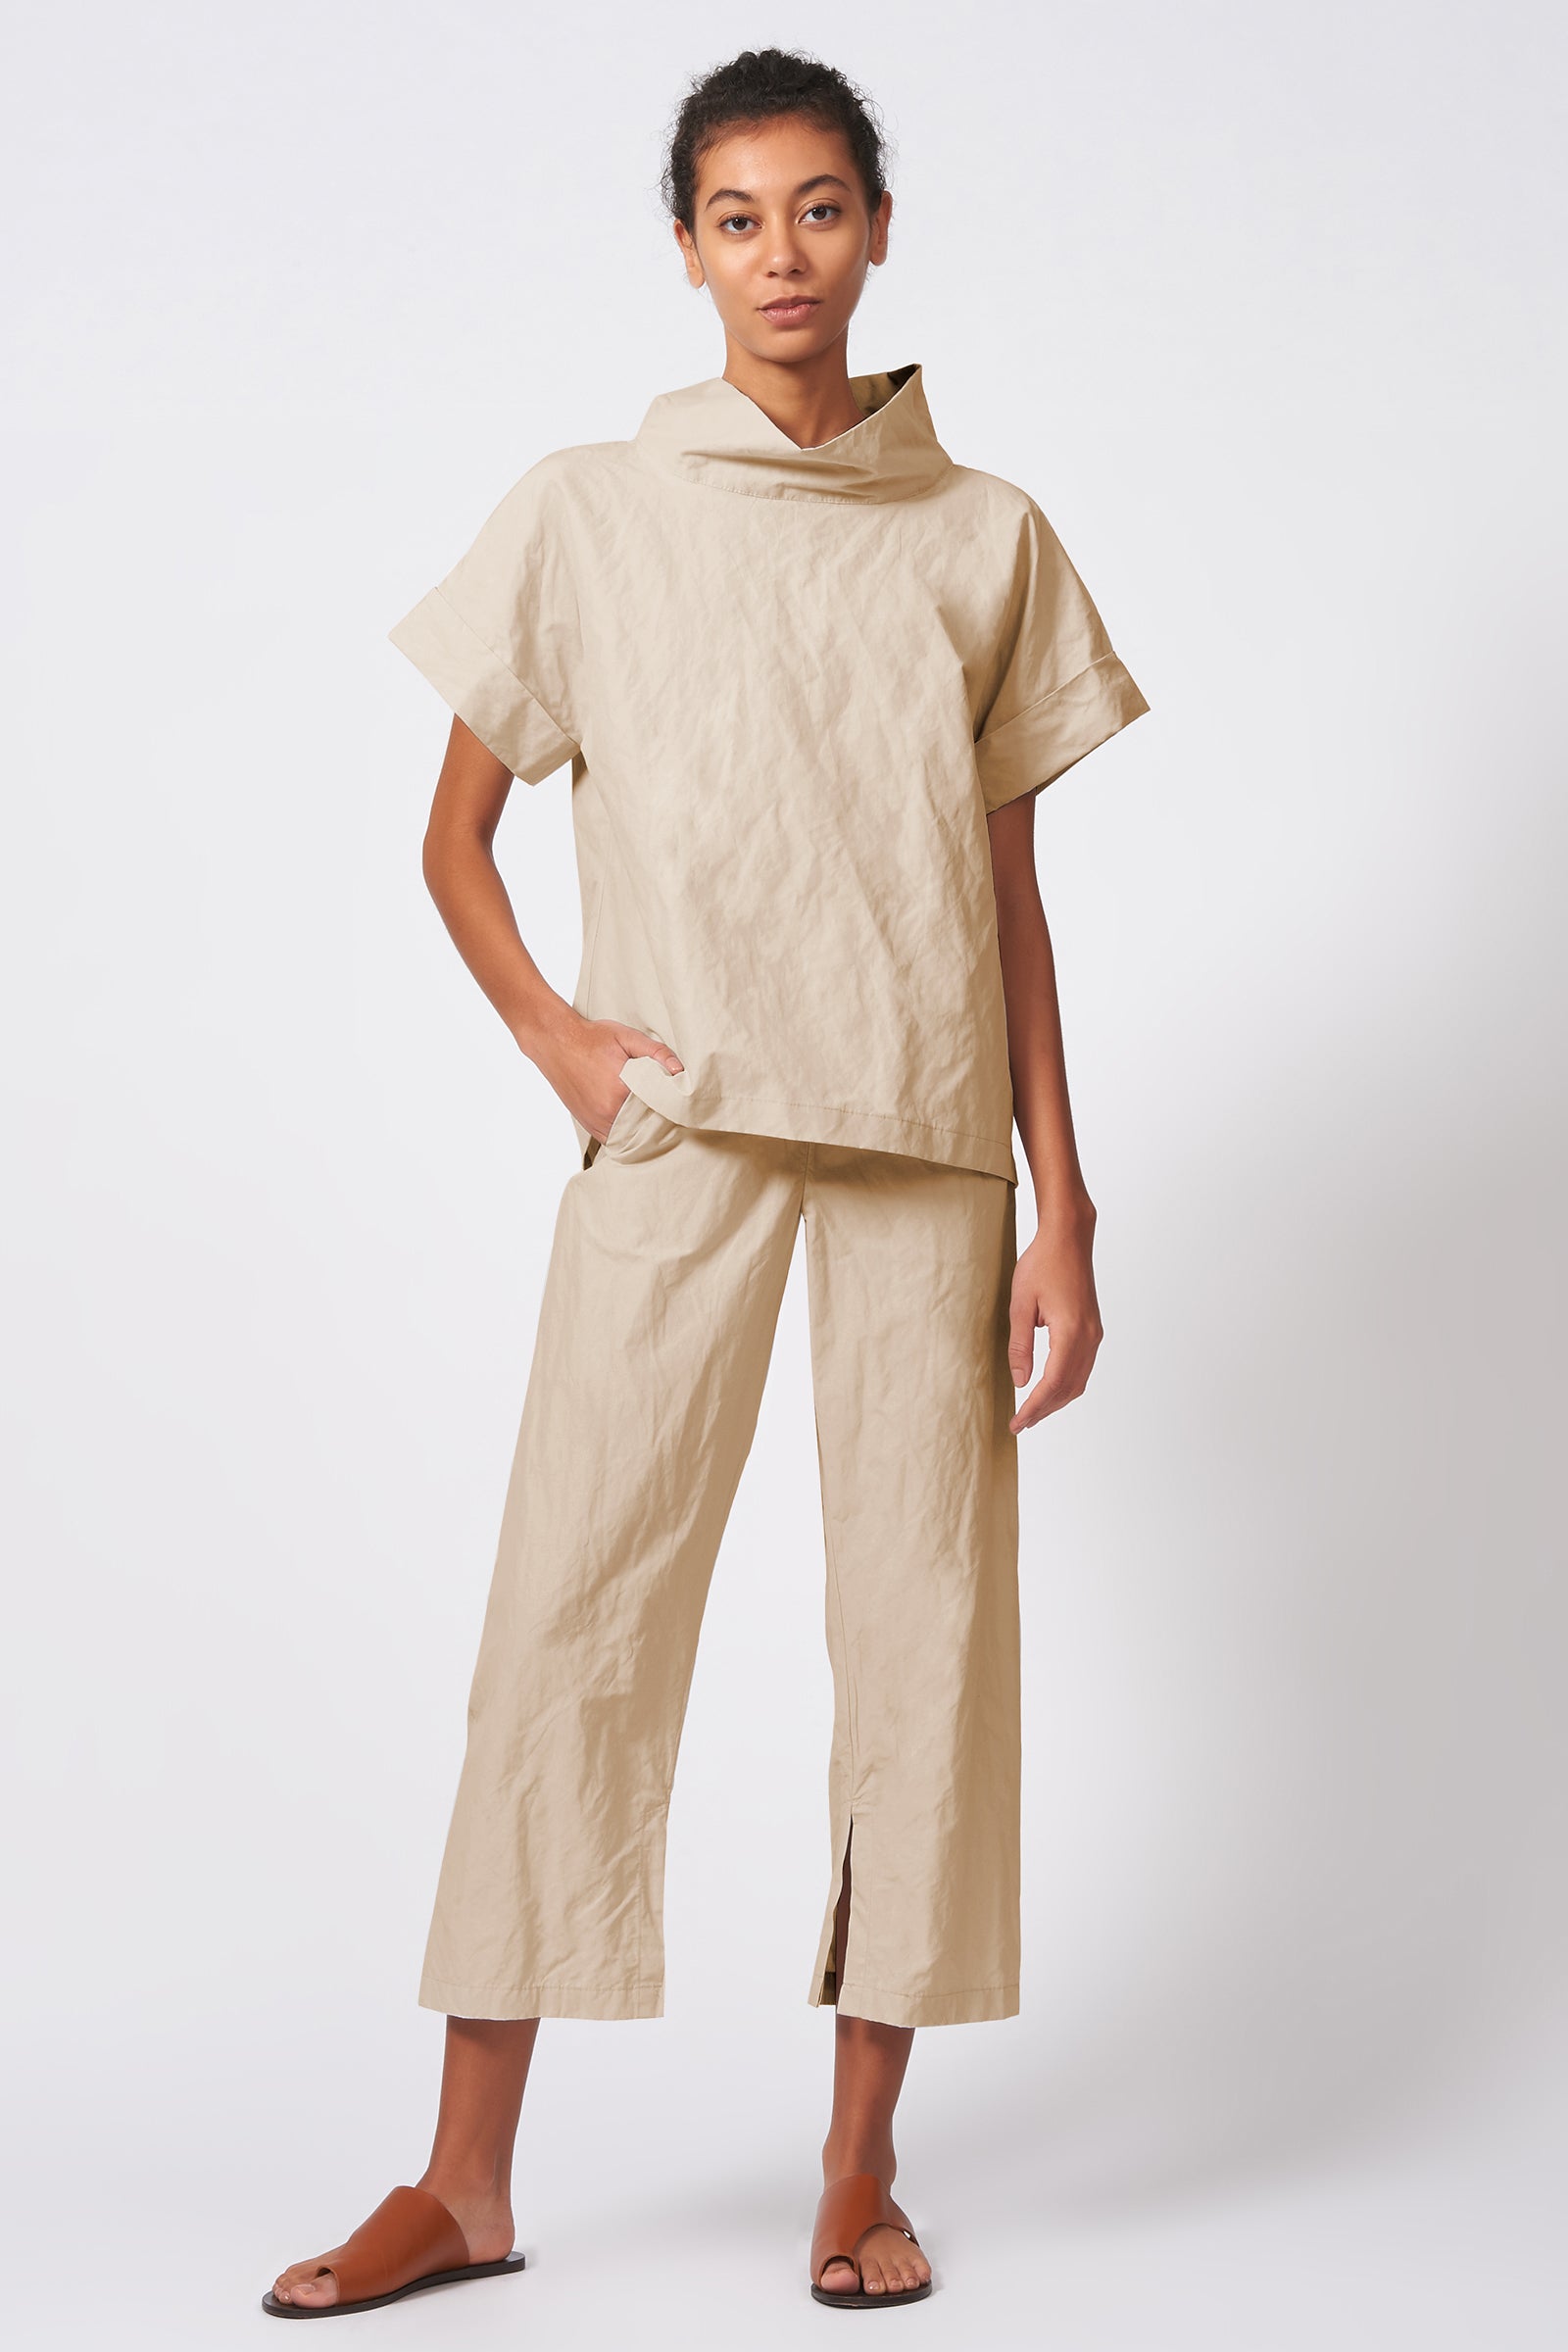 Kal Rieman Cuff Kimono Tee in khaki Italian cotton nylon on model standing with hands in pockets